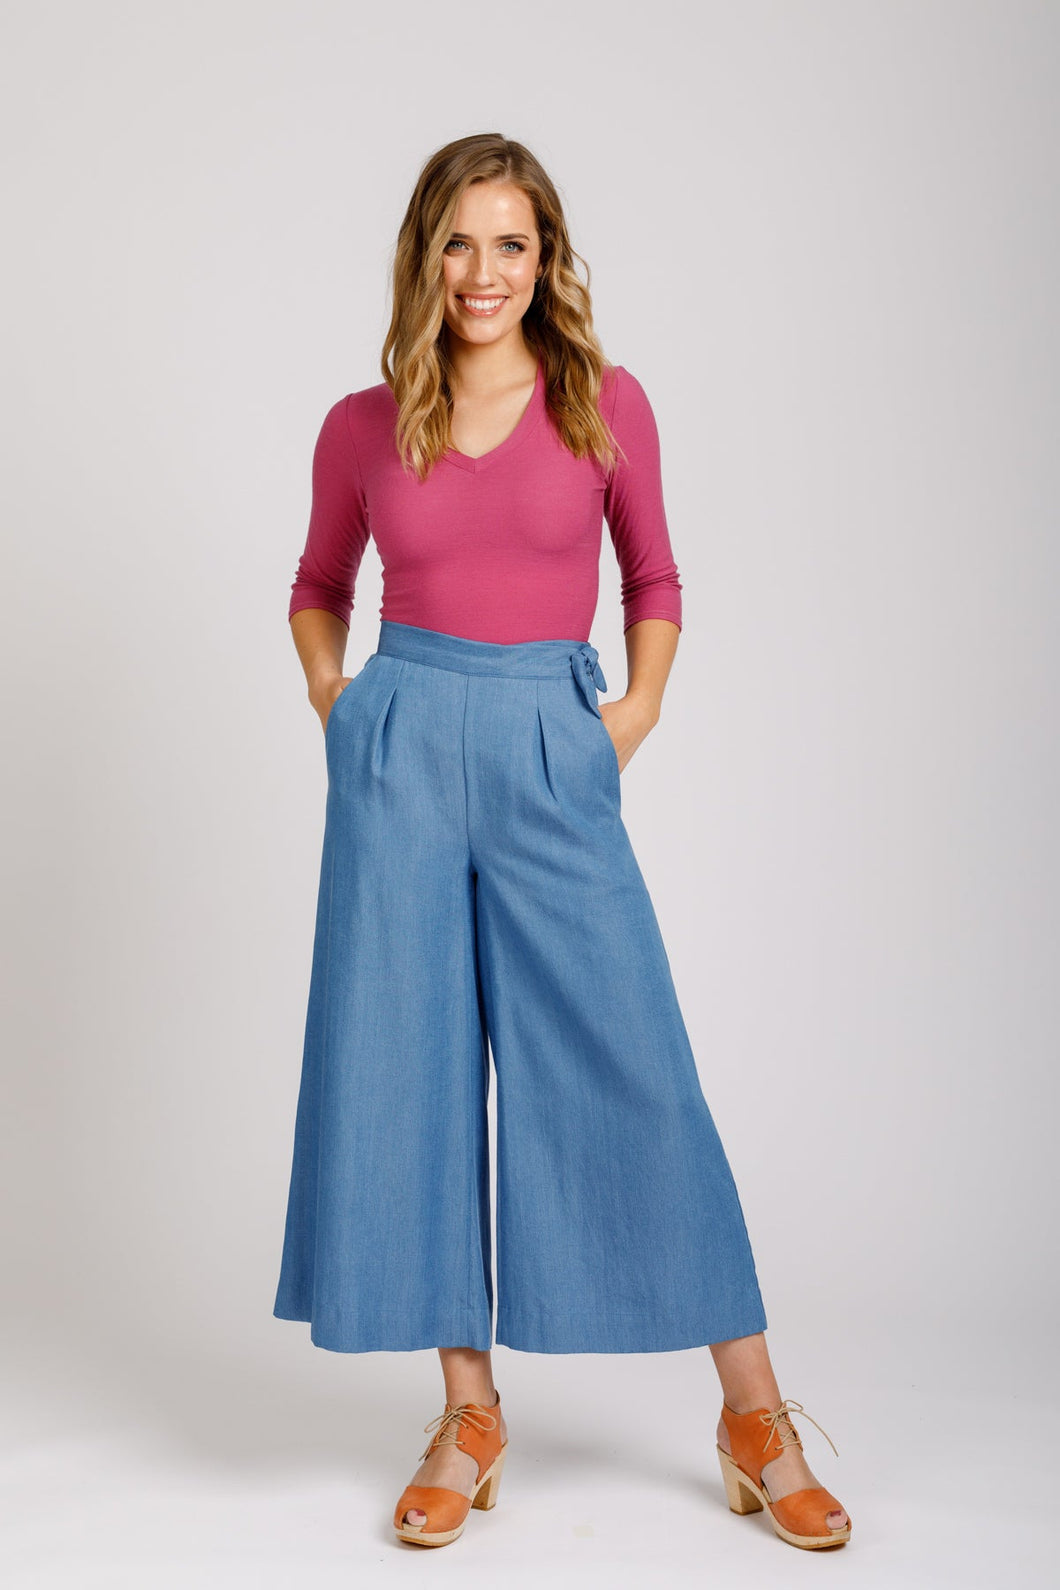 Megan Nielsen Opal Pants and Shorts Sewing Pattern